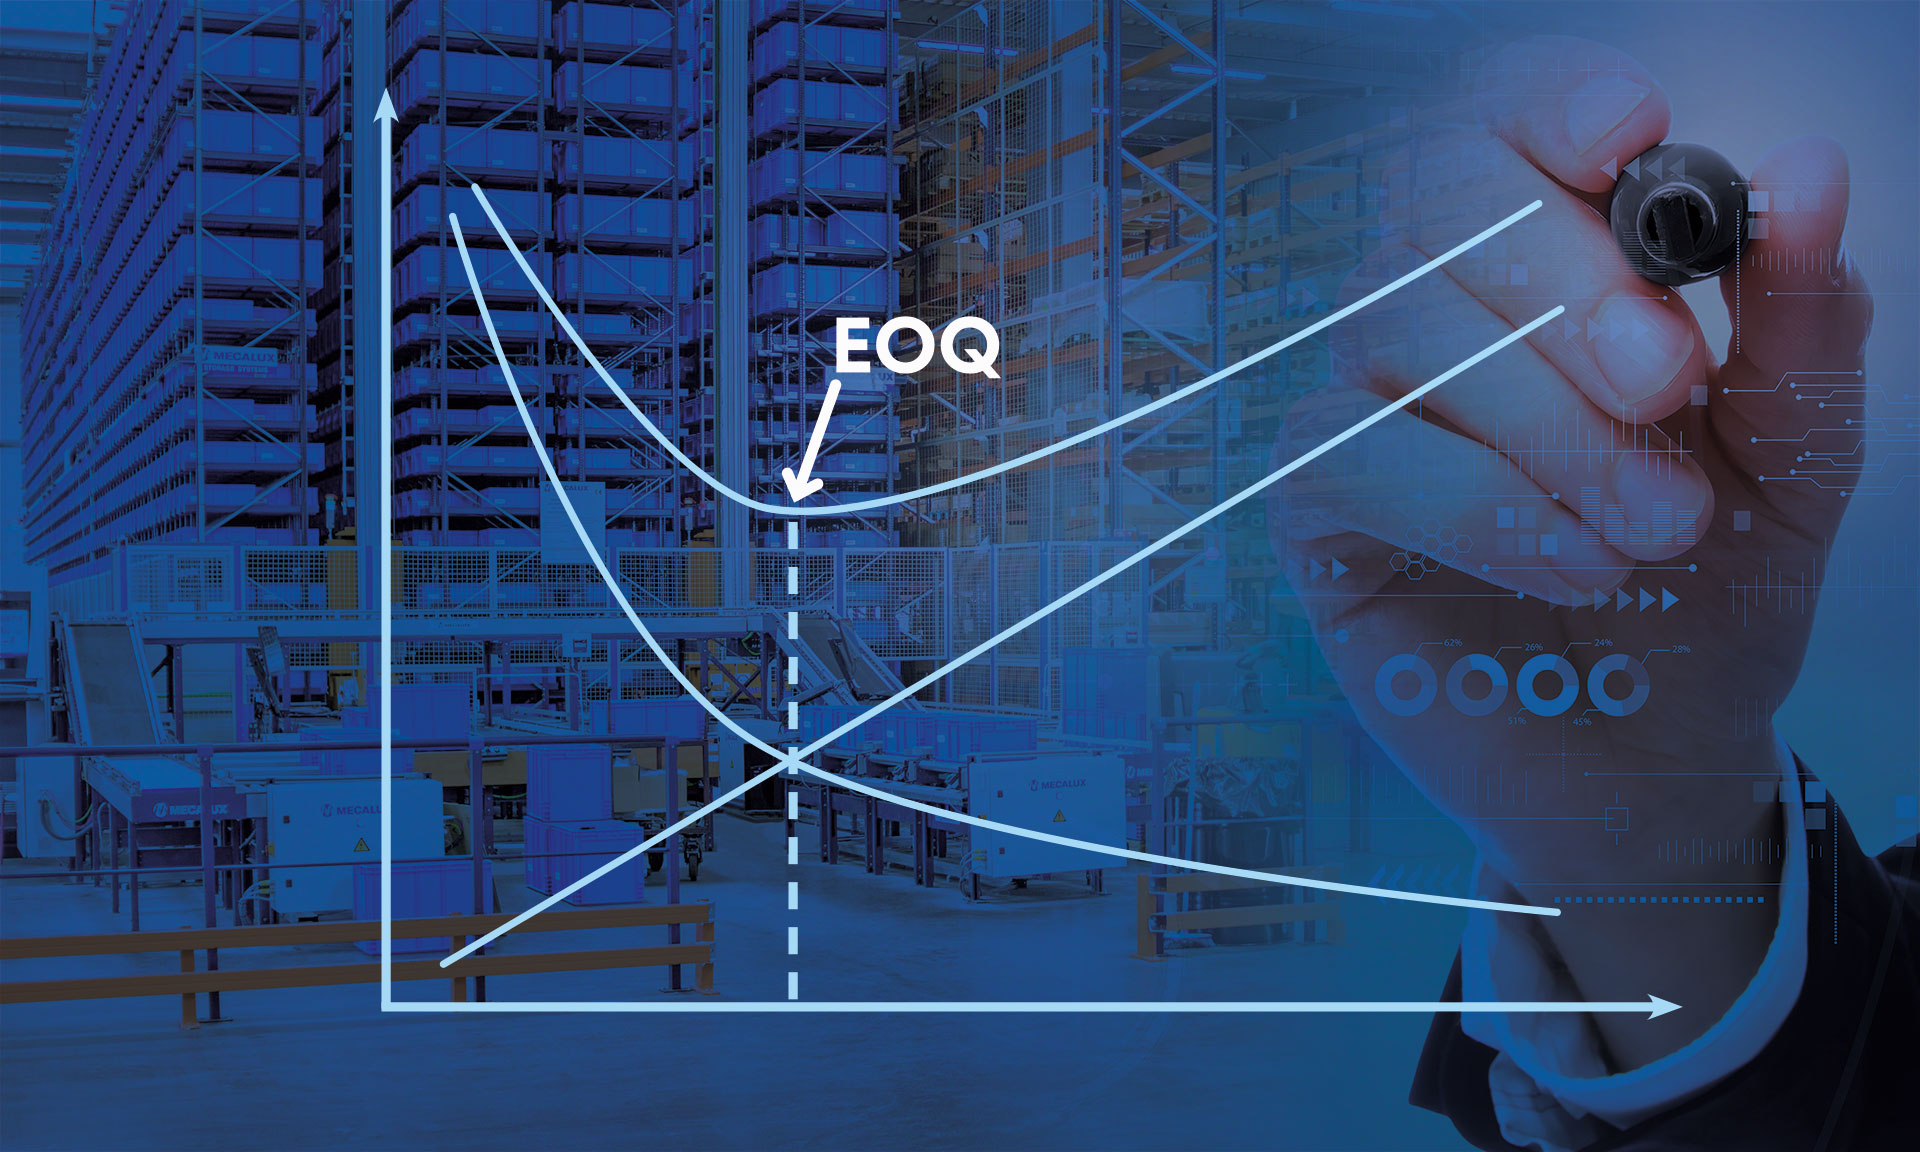 La EOQ (Economic Order Quantity) determina la cantidad óptima de productos a pedir en una compra para minimizar los costes